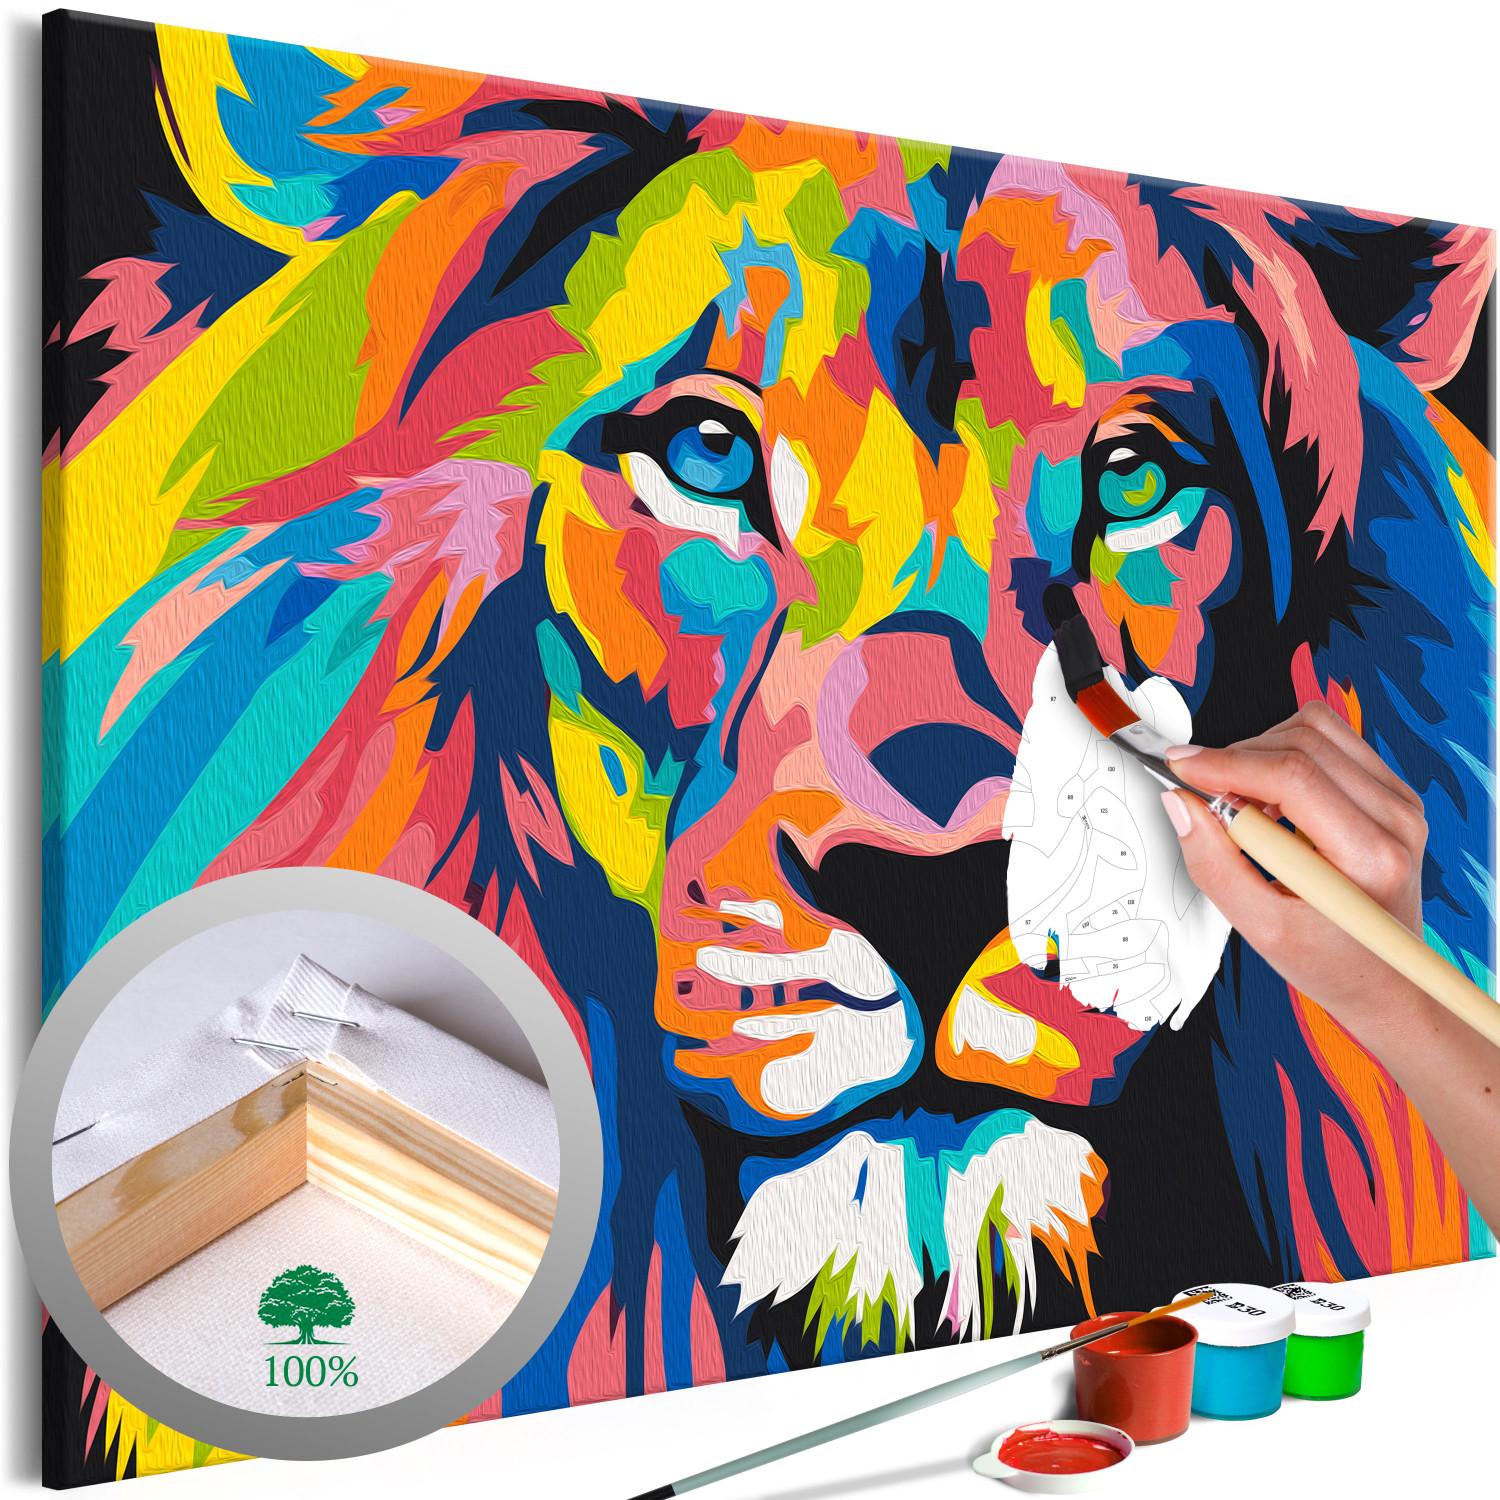 Cuadro para pintar por números Colorful Lion